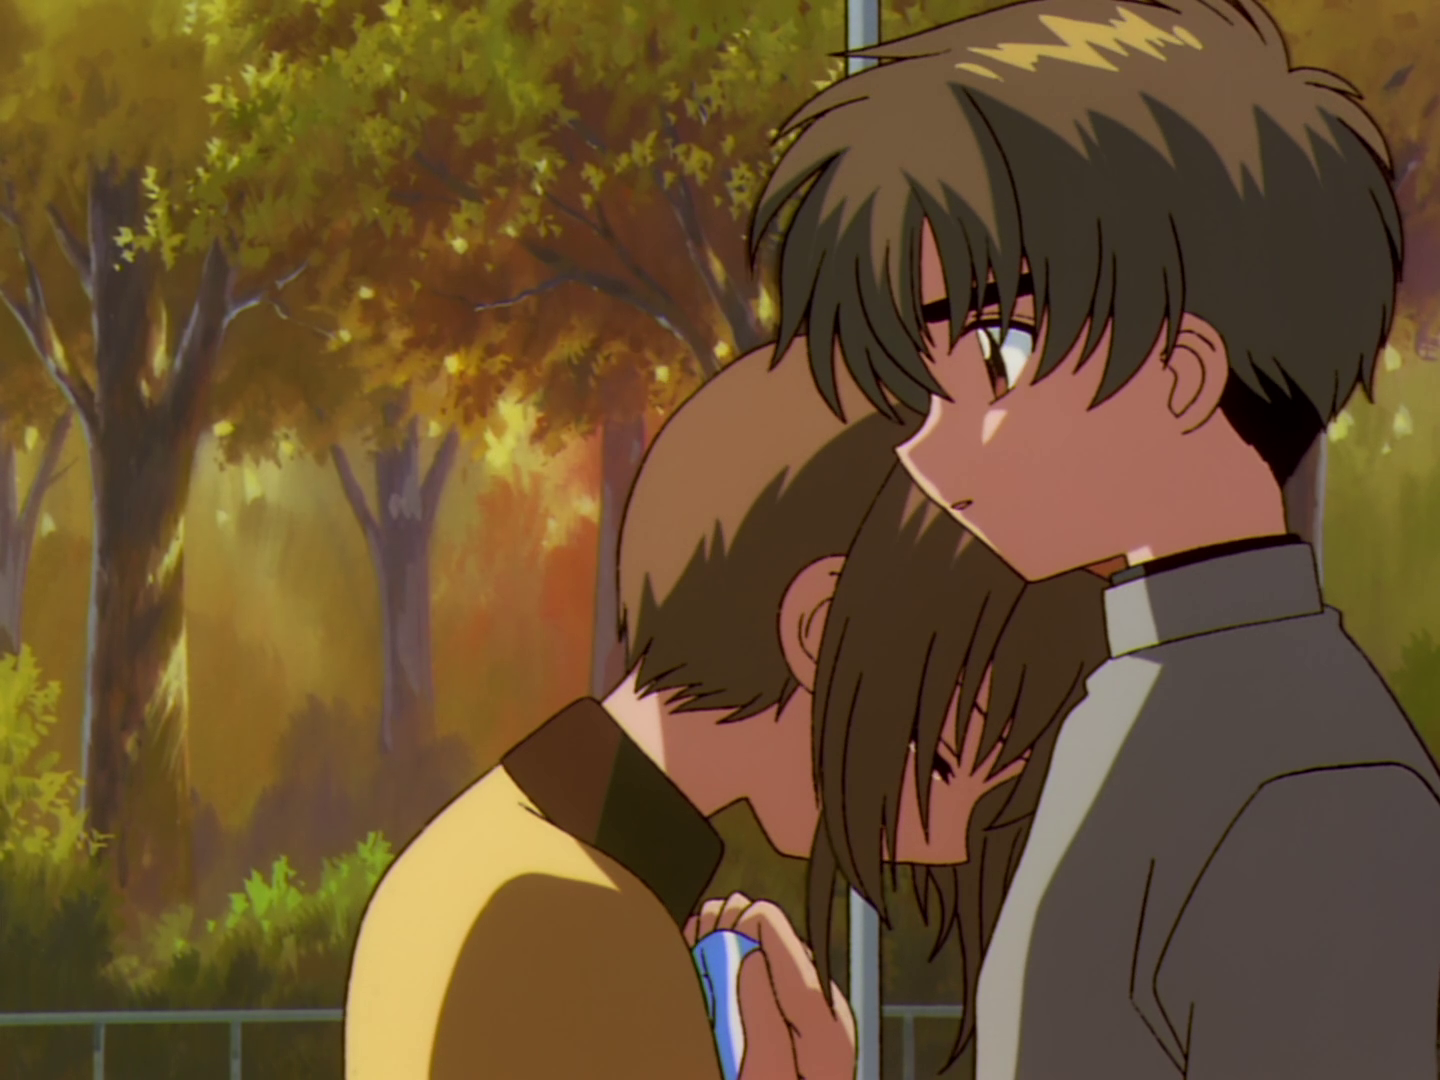 cardcaptor sakura and li kiss